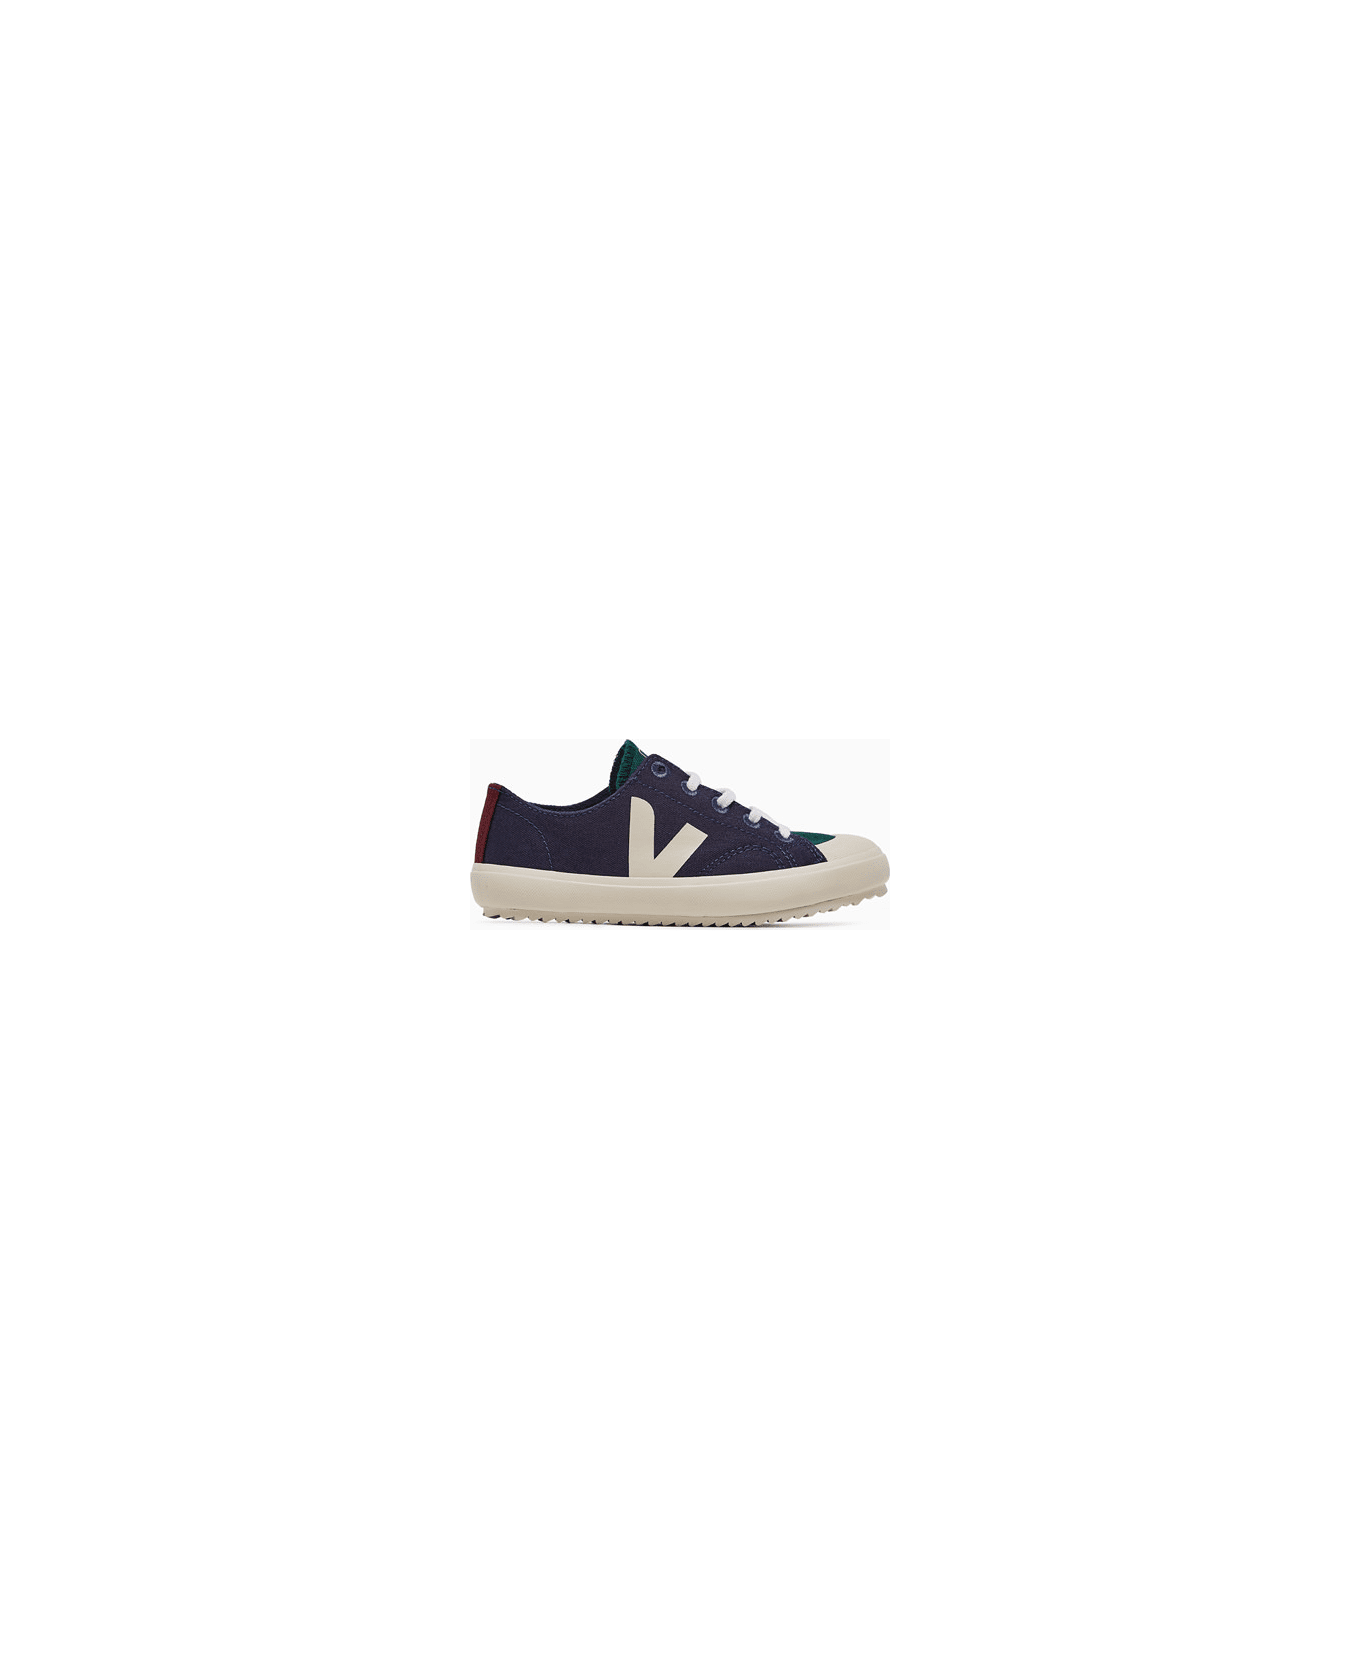 Veja Small Flip Canvas Sneakers Lp0102874c - MARINE